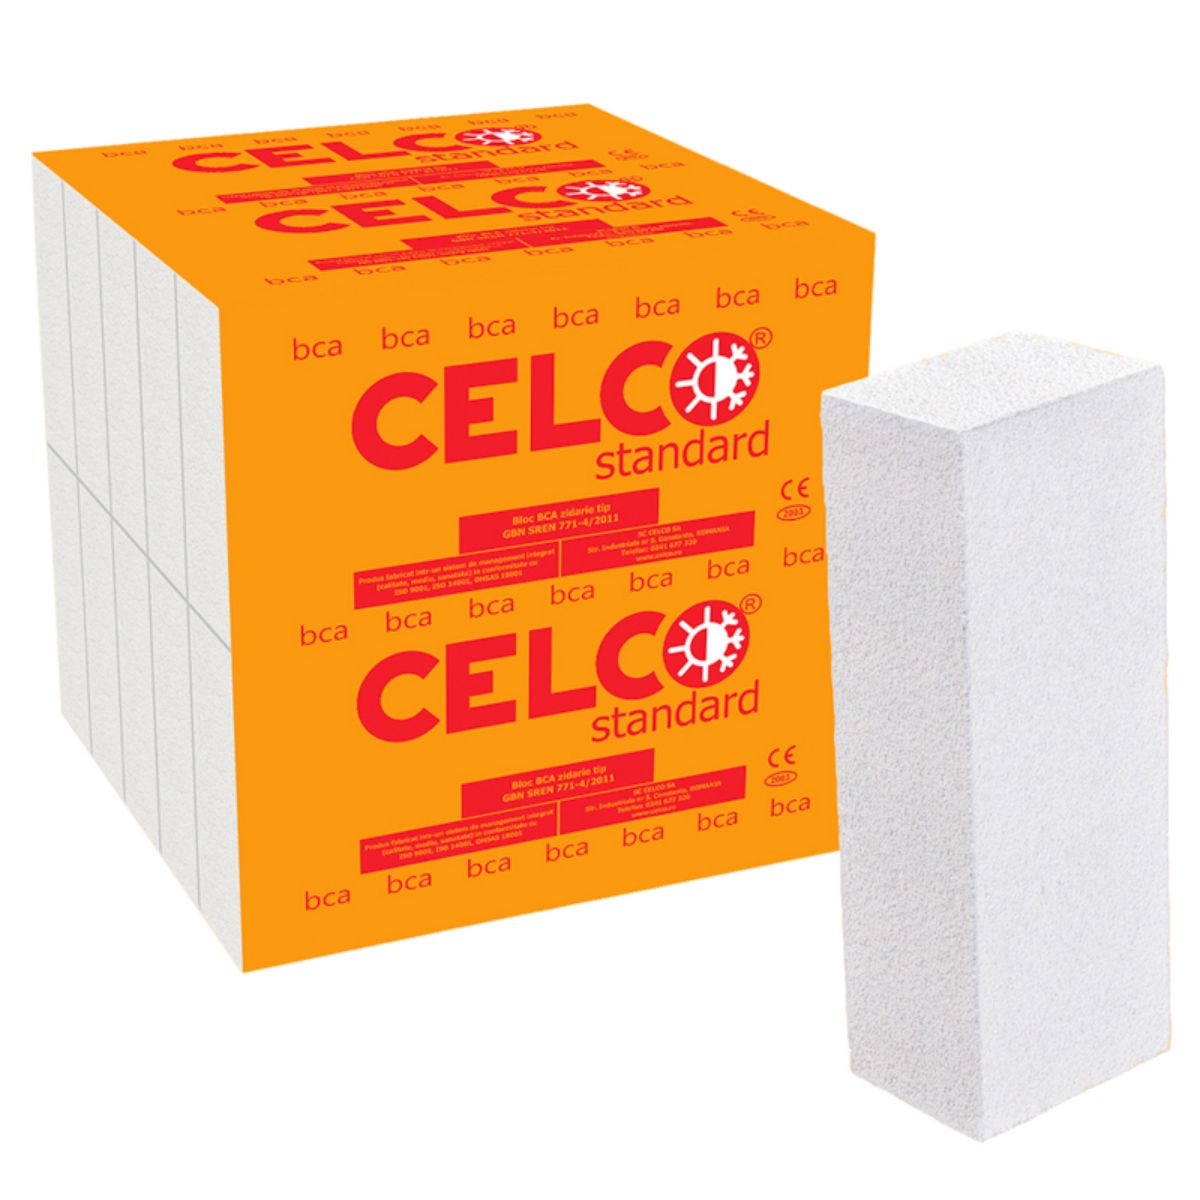 BCA Celco Standard 625/150/240